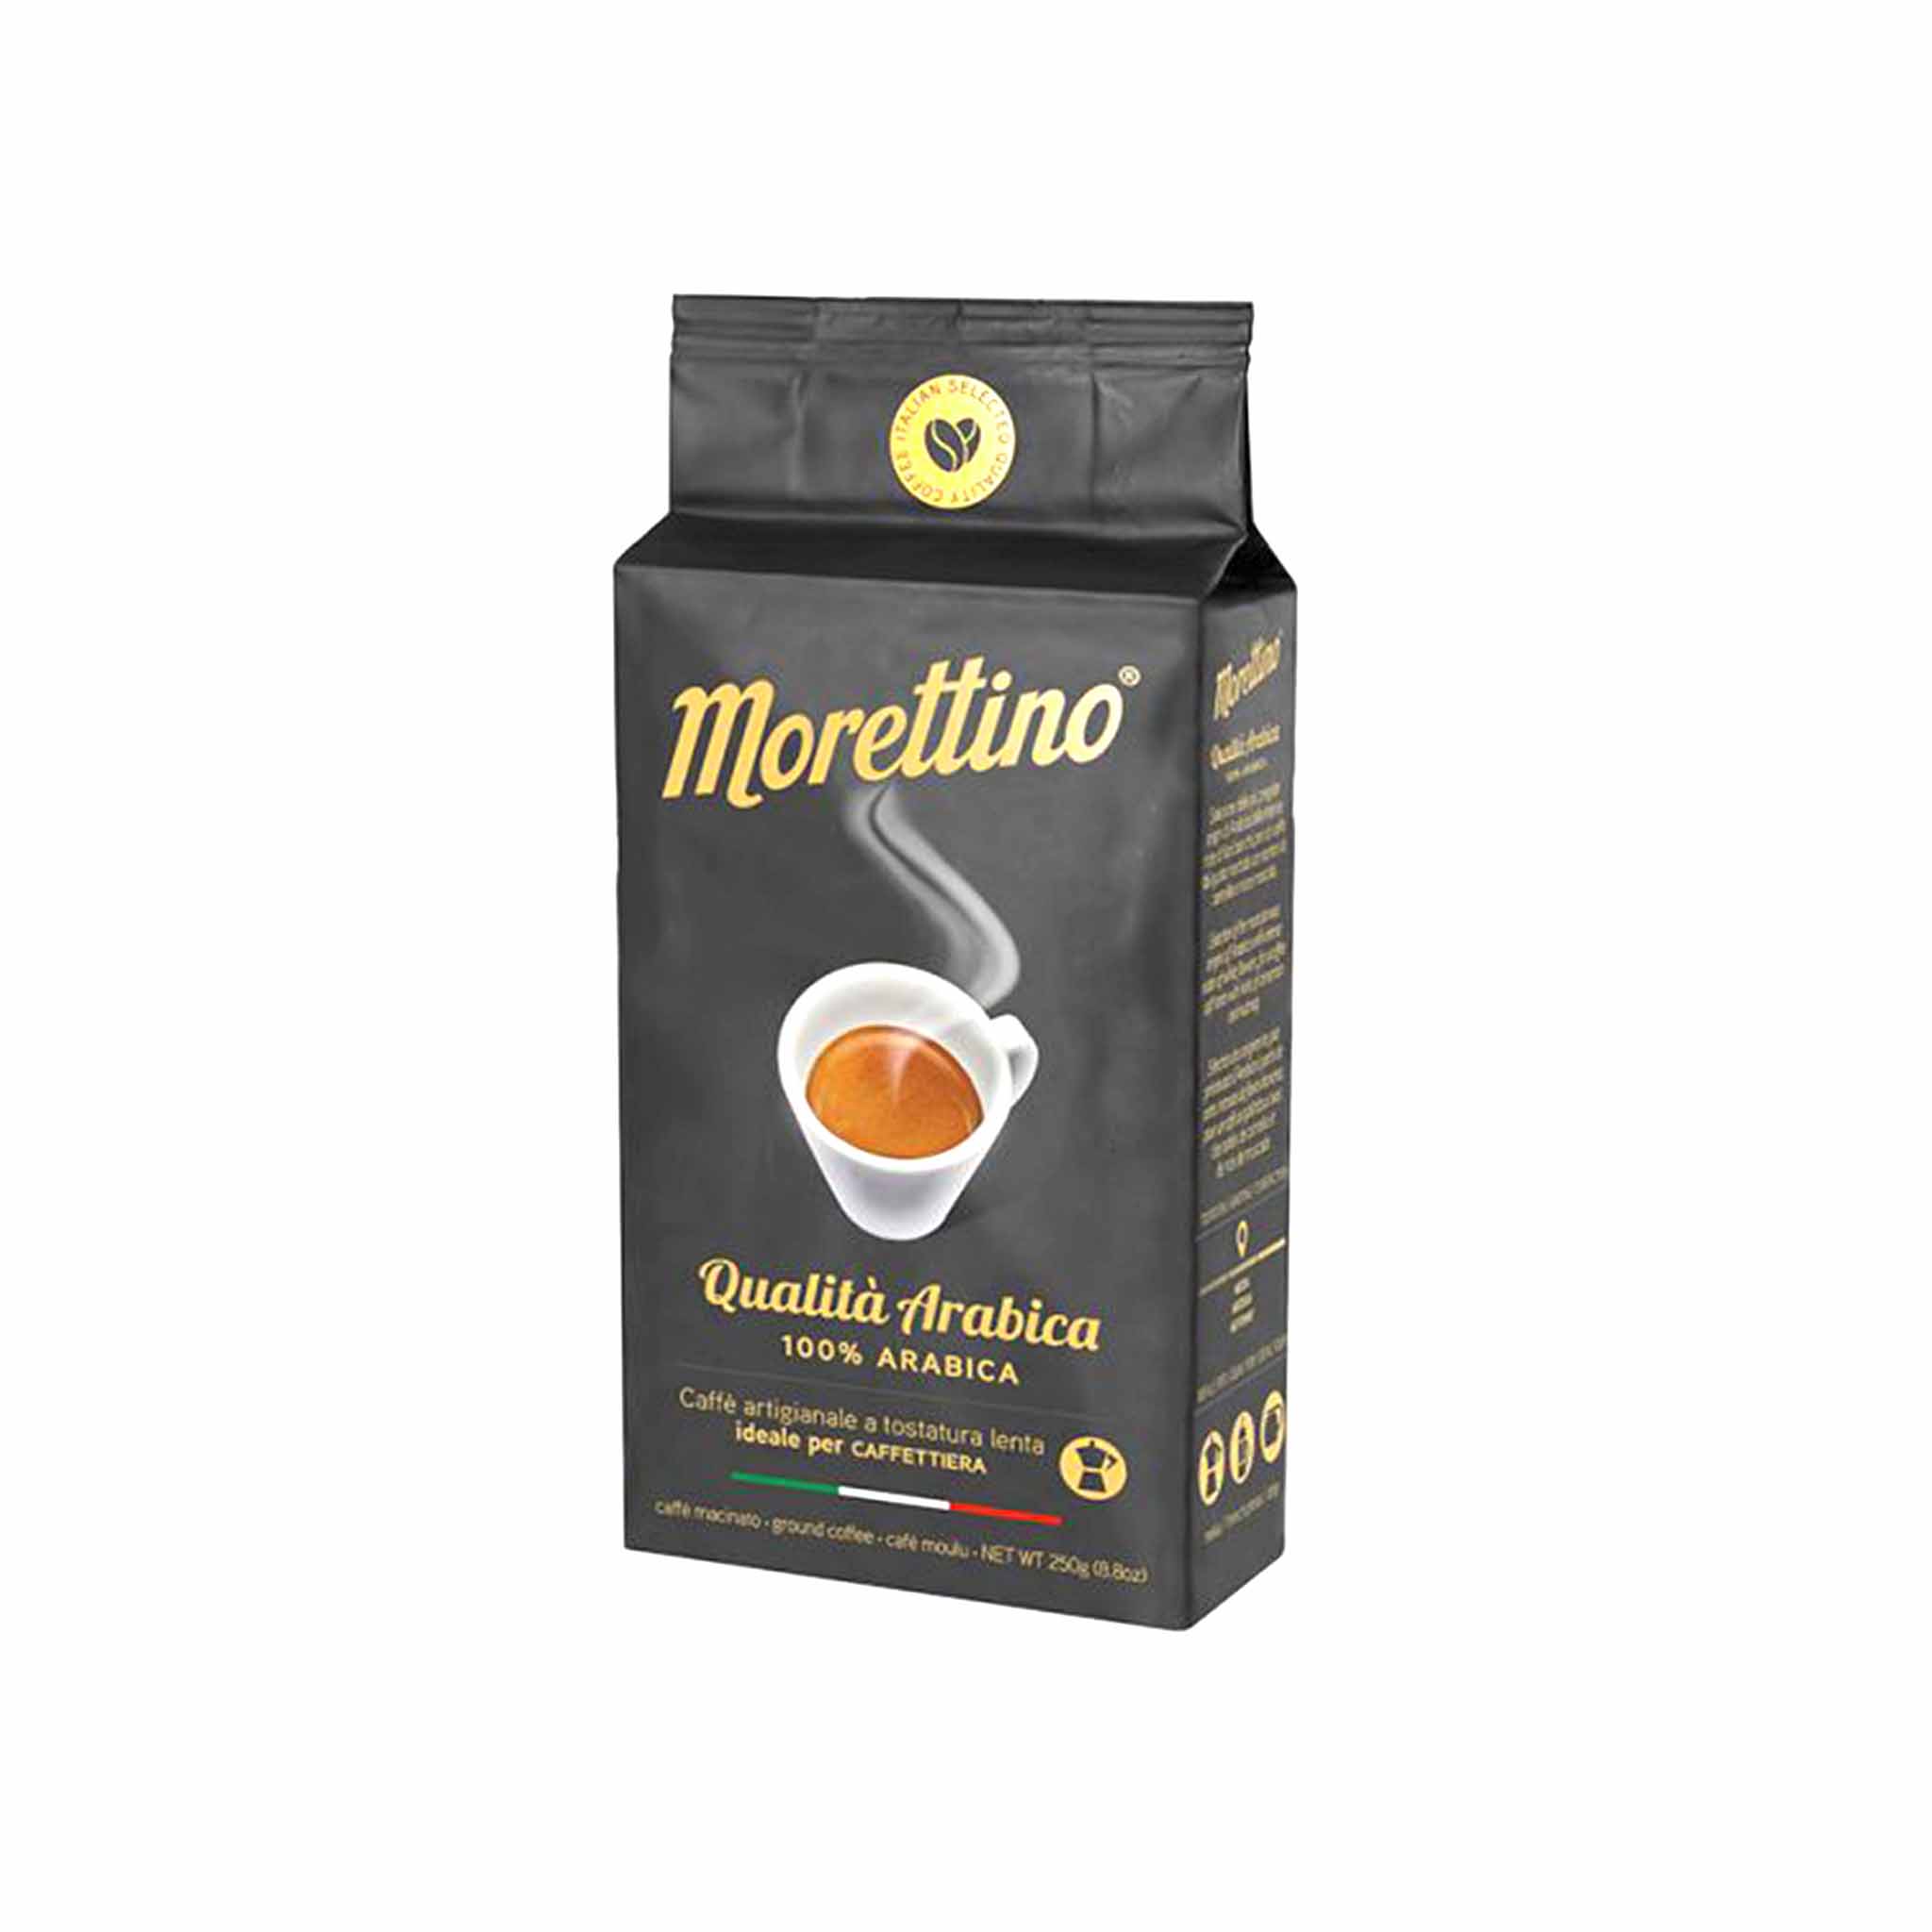 MORETTINO ARABICA CLUB GROUND COFFEE 250g